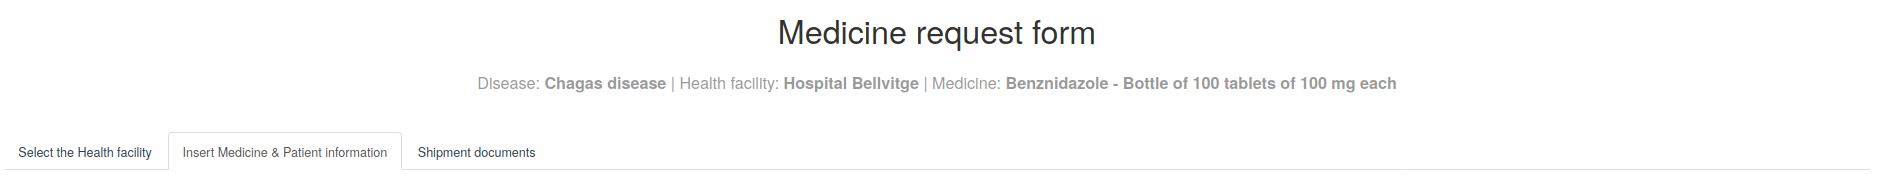 Medicine Request Form